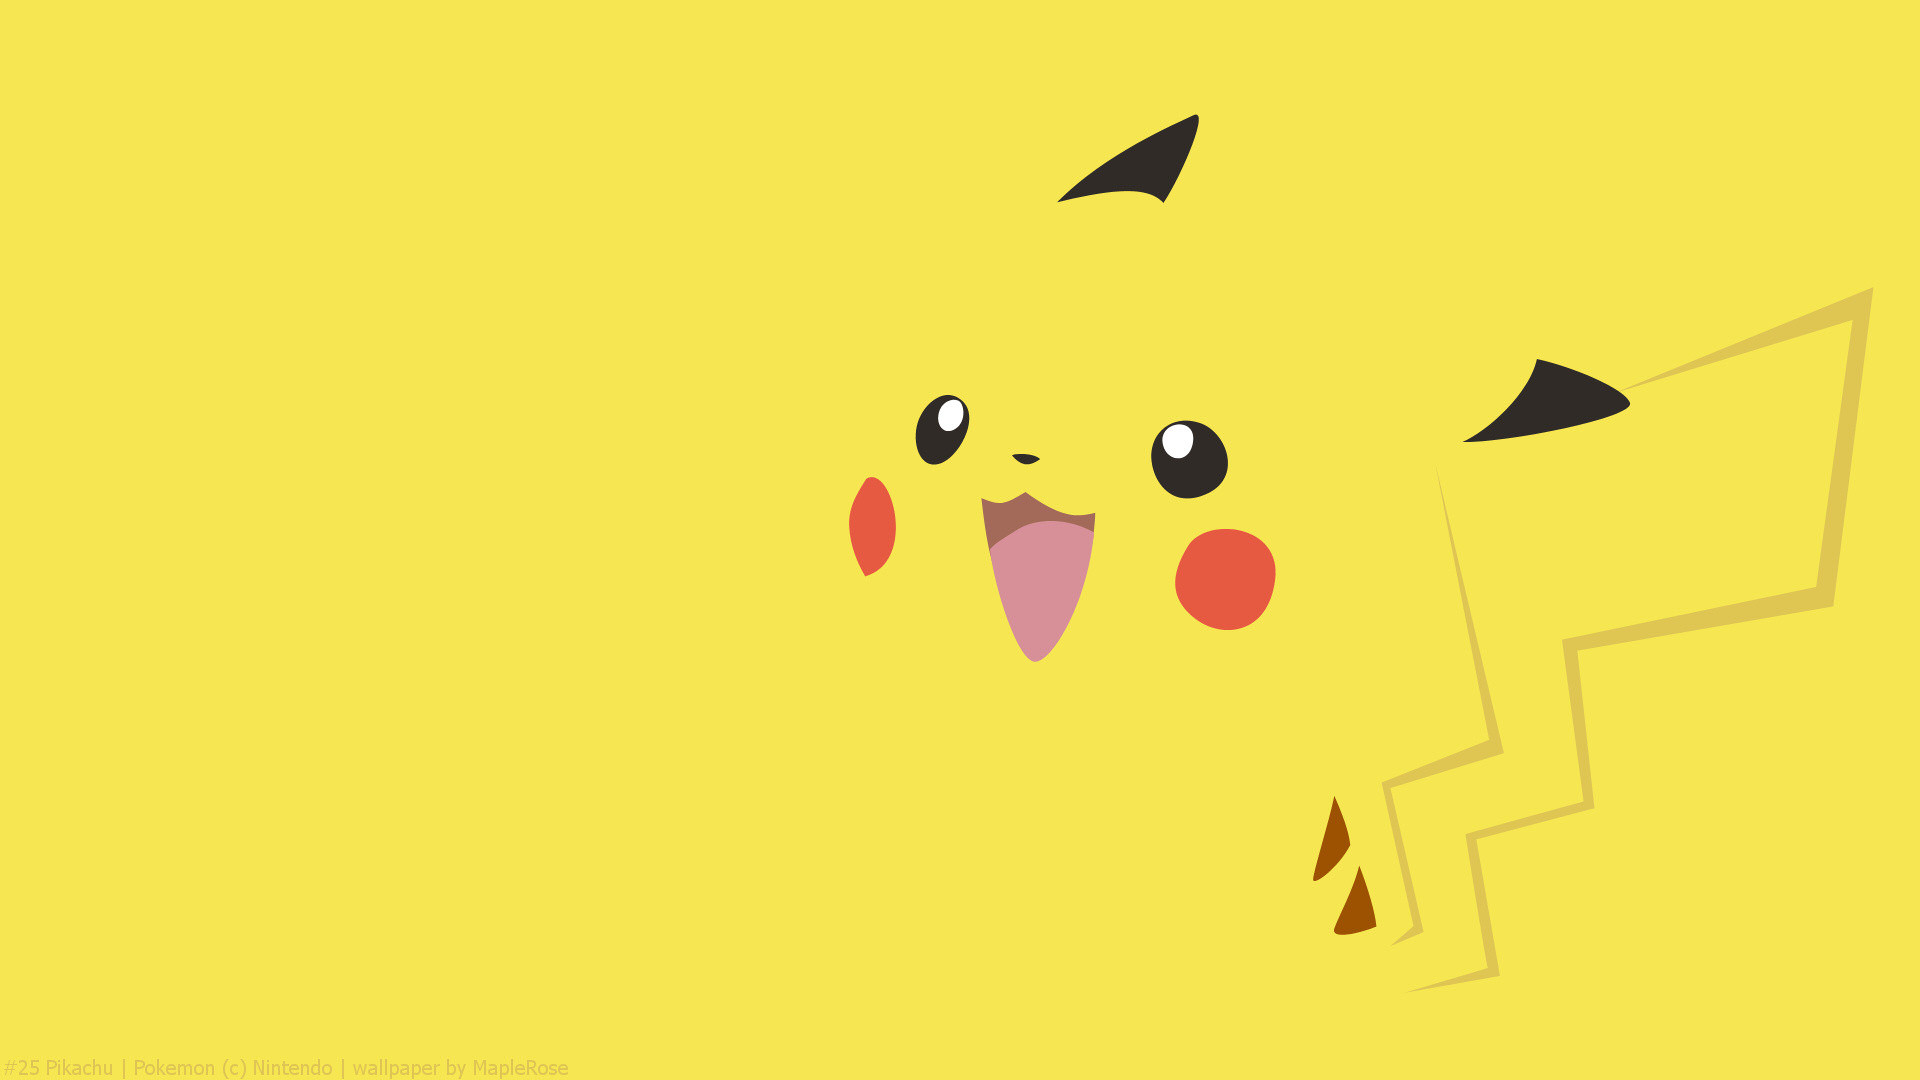 Pikachu #Pokmon minimal wallpaper by MapleRose on deviantART